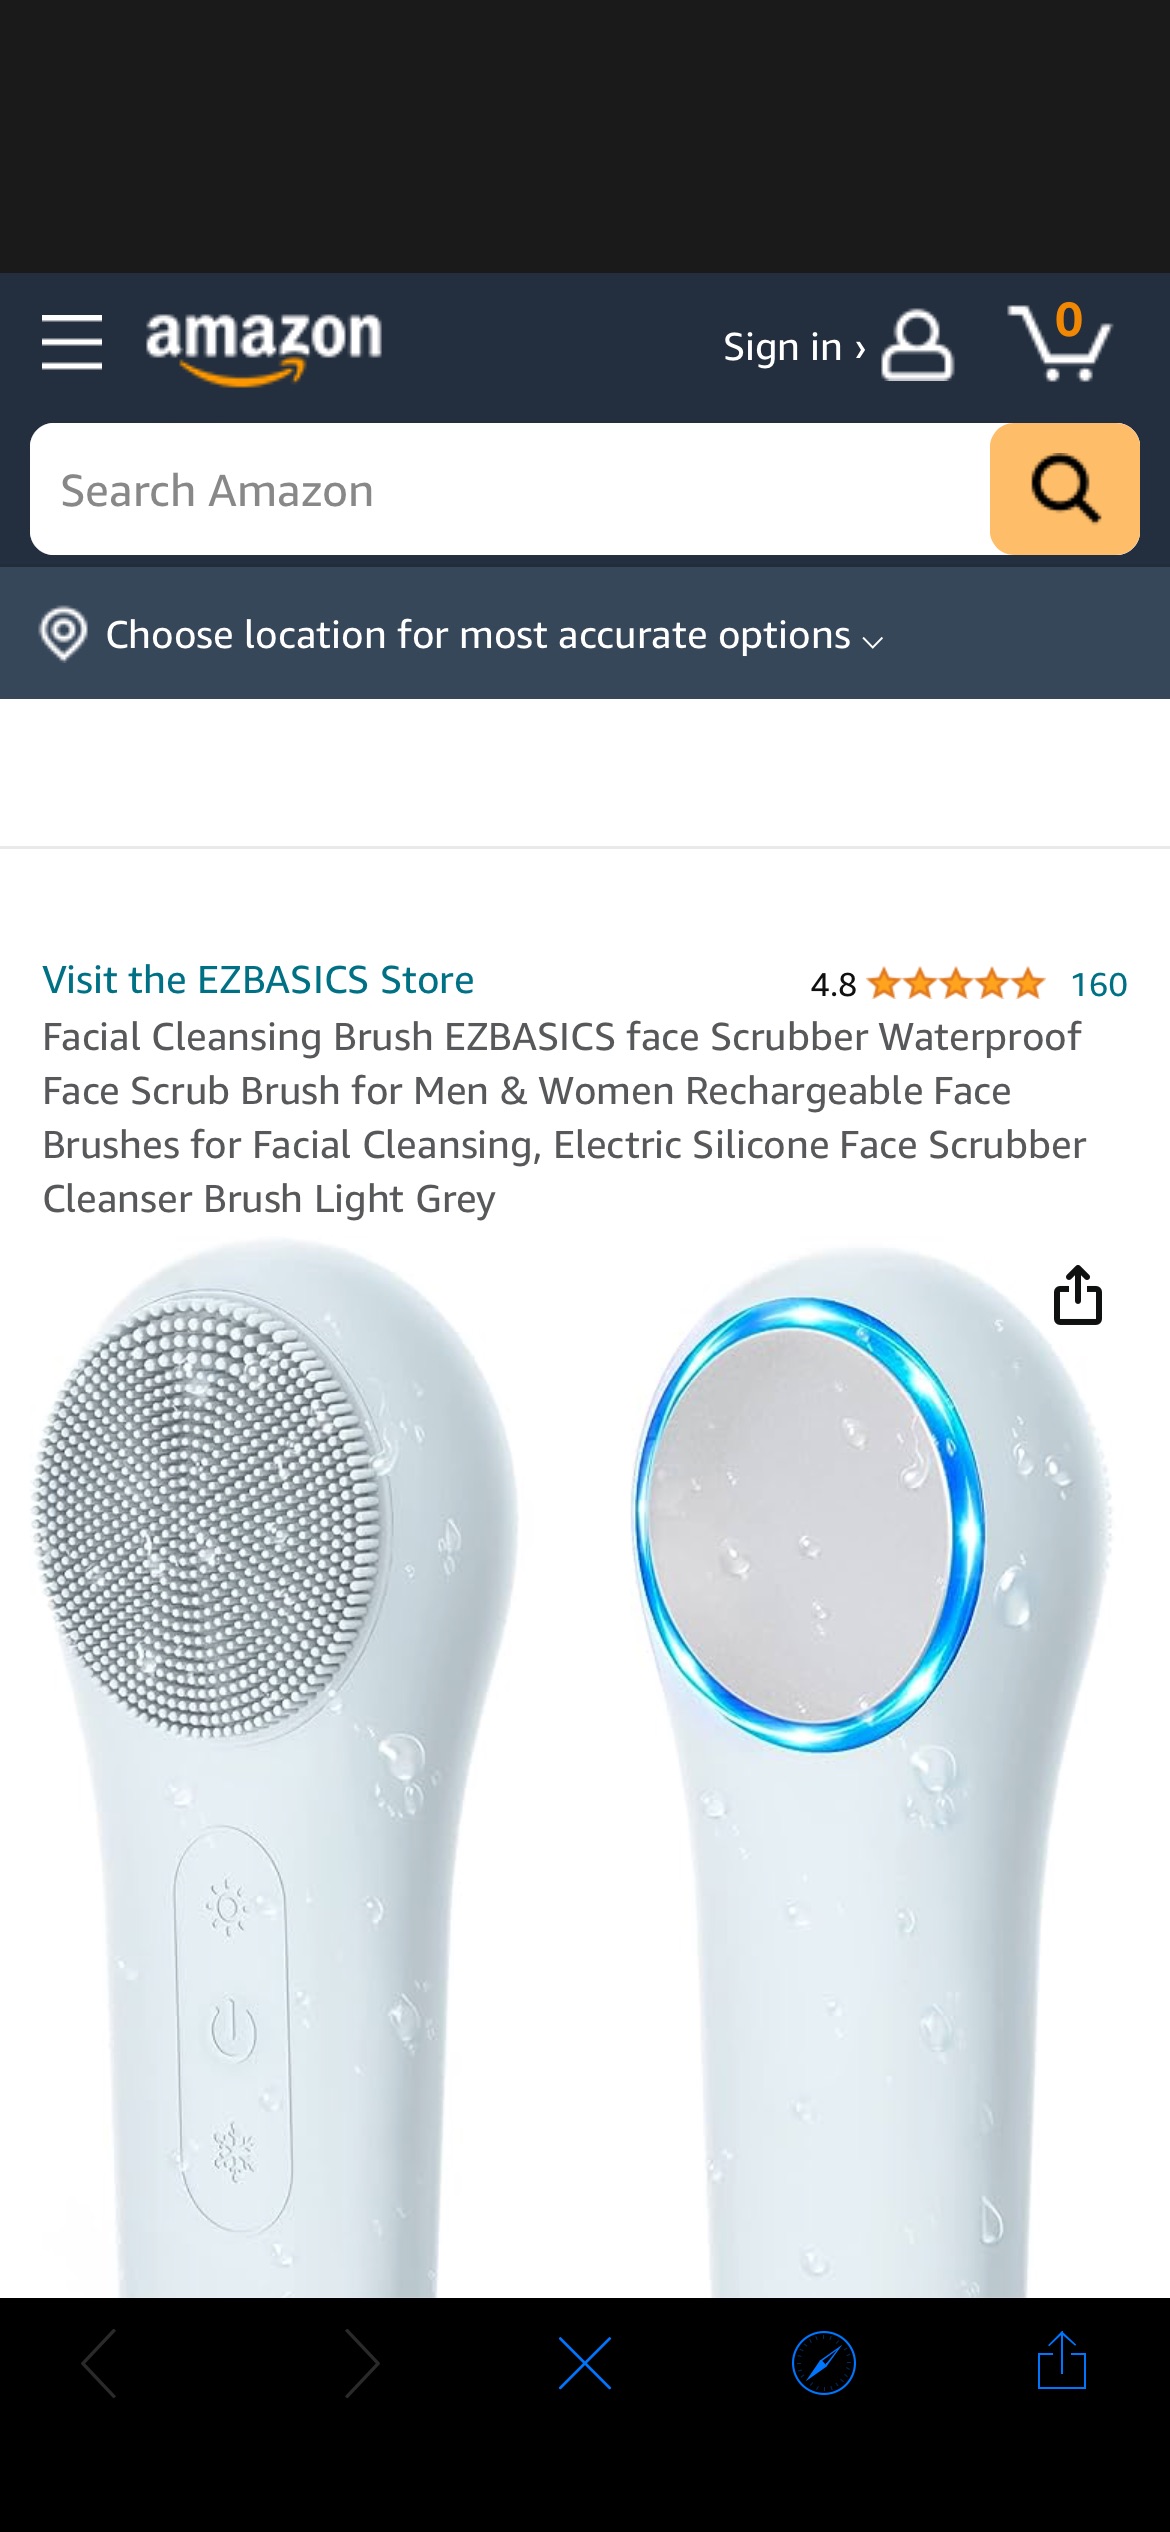 Amazon.com: Facial Cleansing Brush EZBASICS face Scrubber Waterproof Face Scrub Brush for Men & Women Rechargeable Face Brushes for Facial Cleansing, Electric Silicone Face Scrubber Cleanser Brush Lig